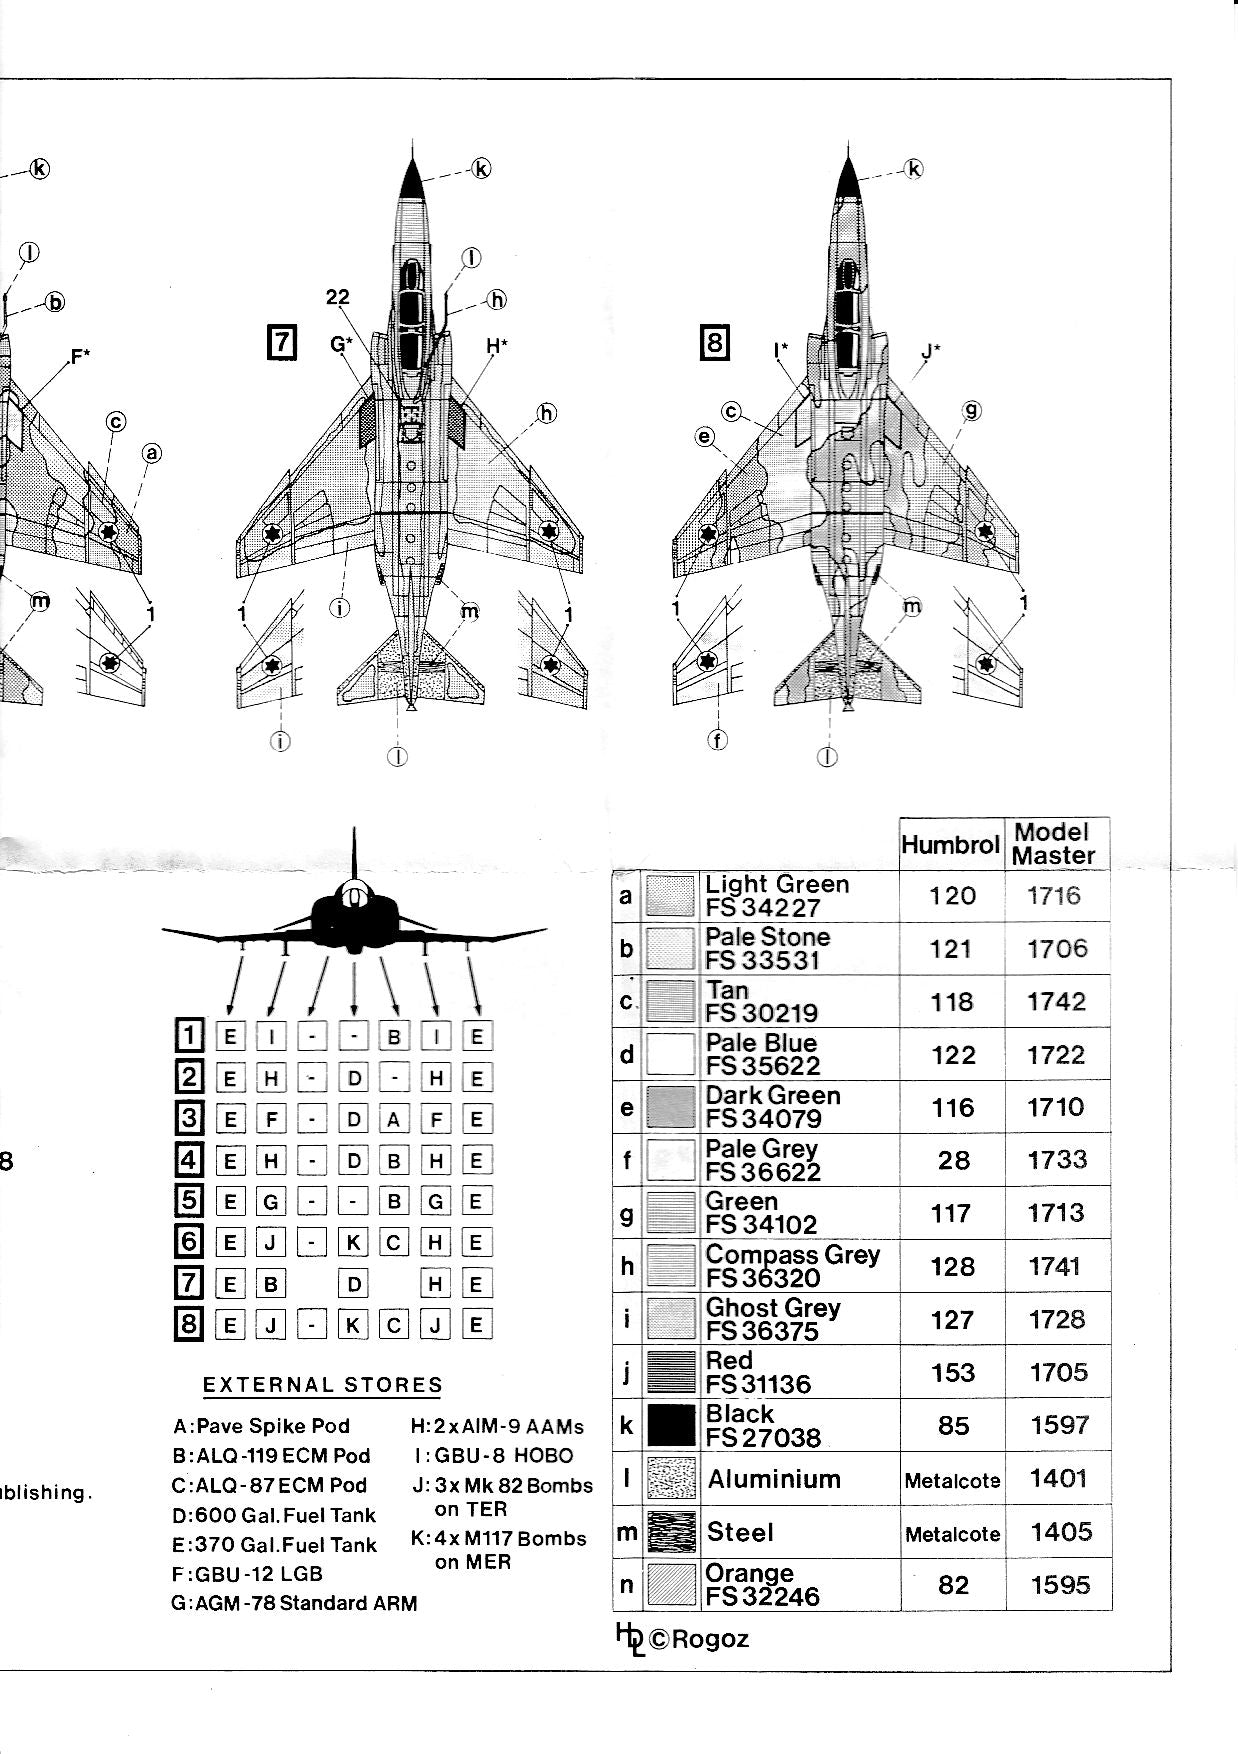 Hi-Decal Line 72-025 F-4 RF-4E F-4E(S) and Kurnass 2000 1/72